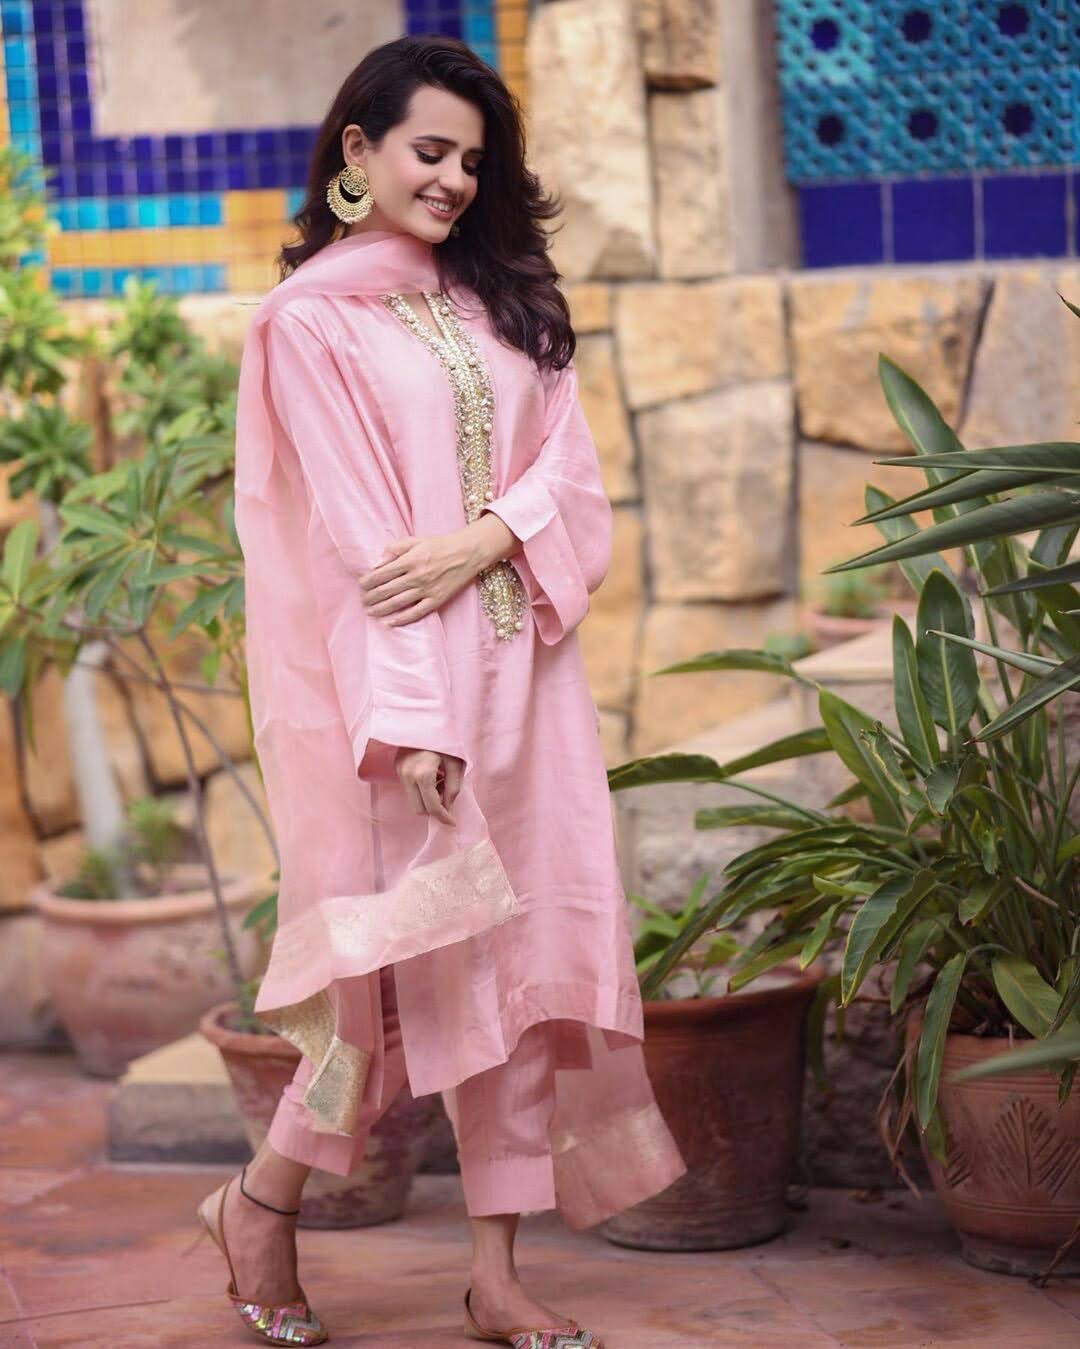 Sumble Iqbal Nice Pose in Pink Dress on Eid 2 Day